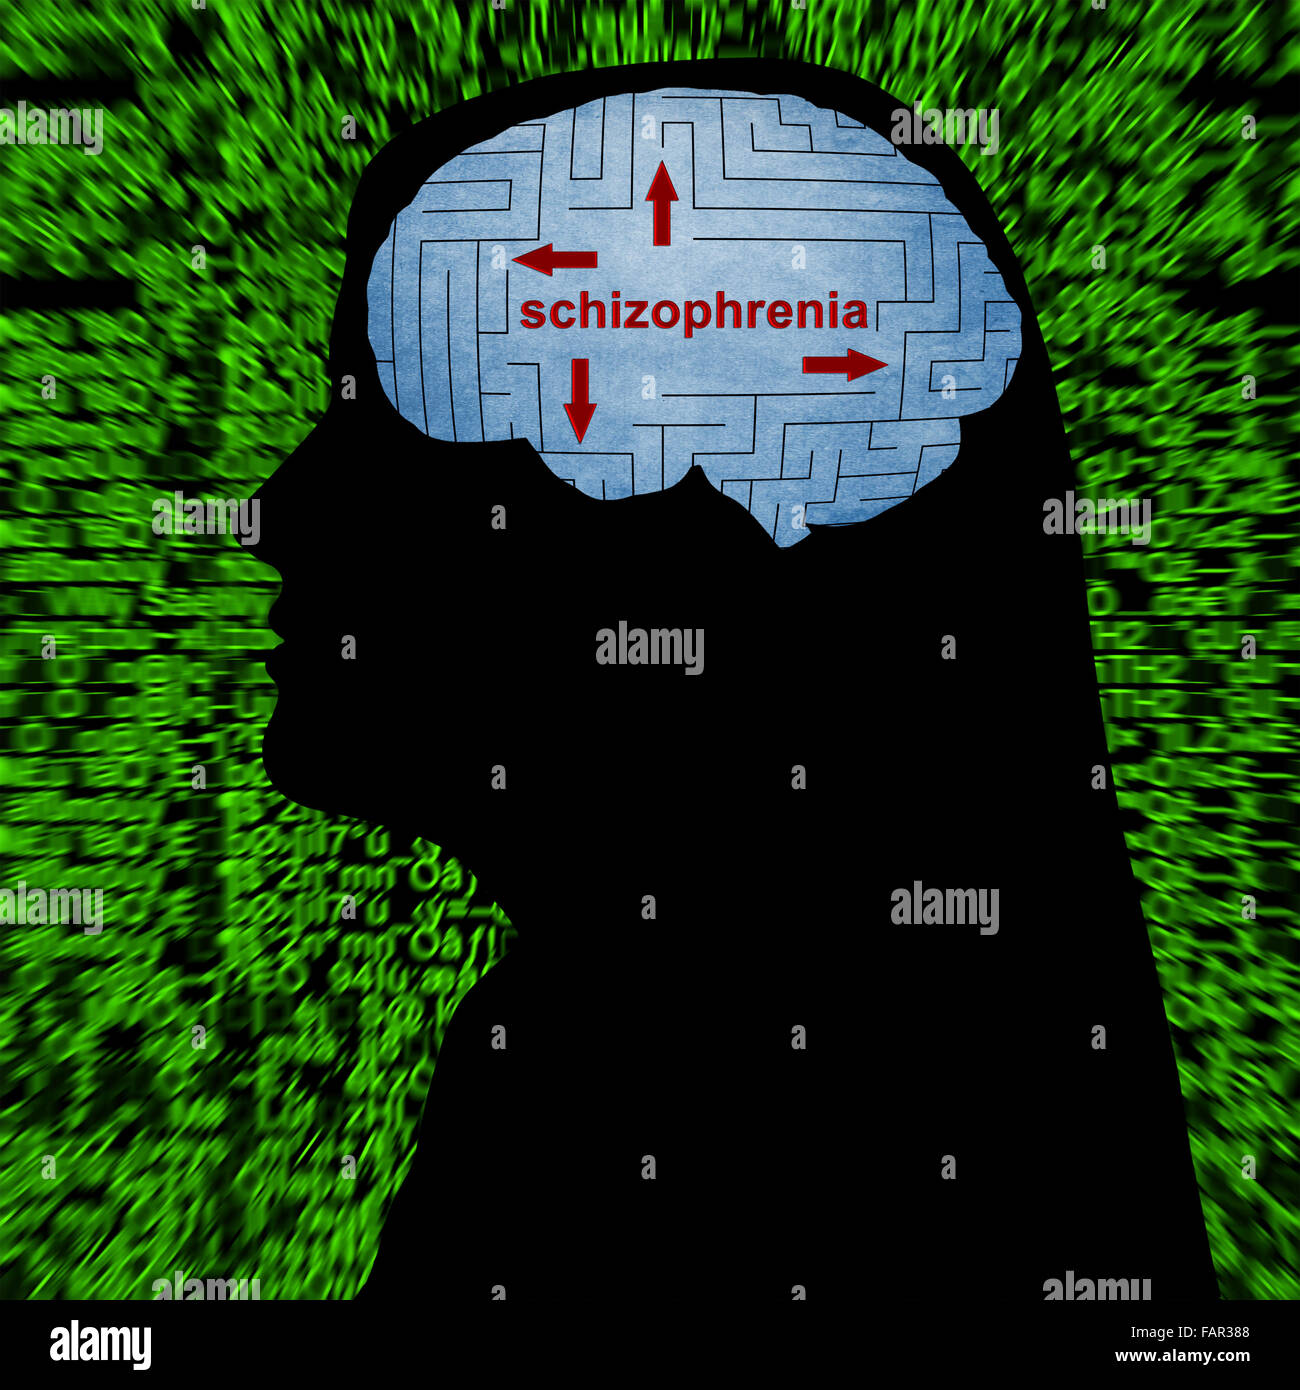 Schizophrenia in mind Stock Photo